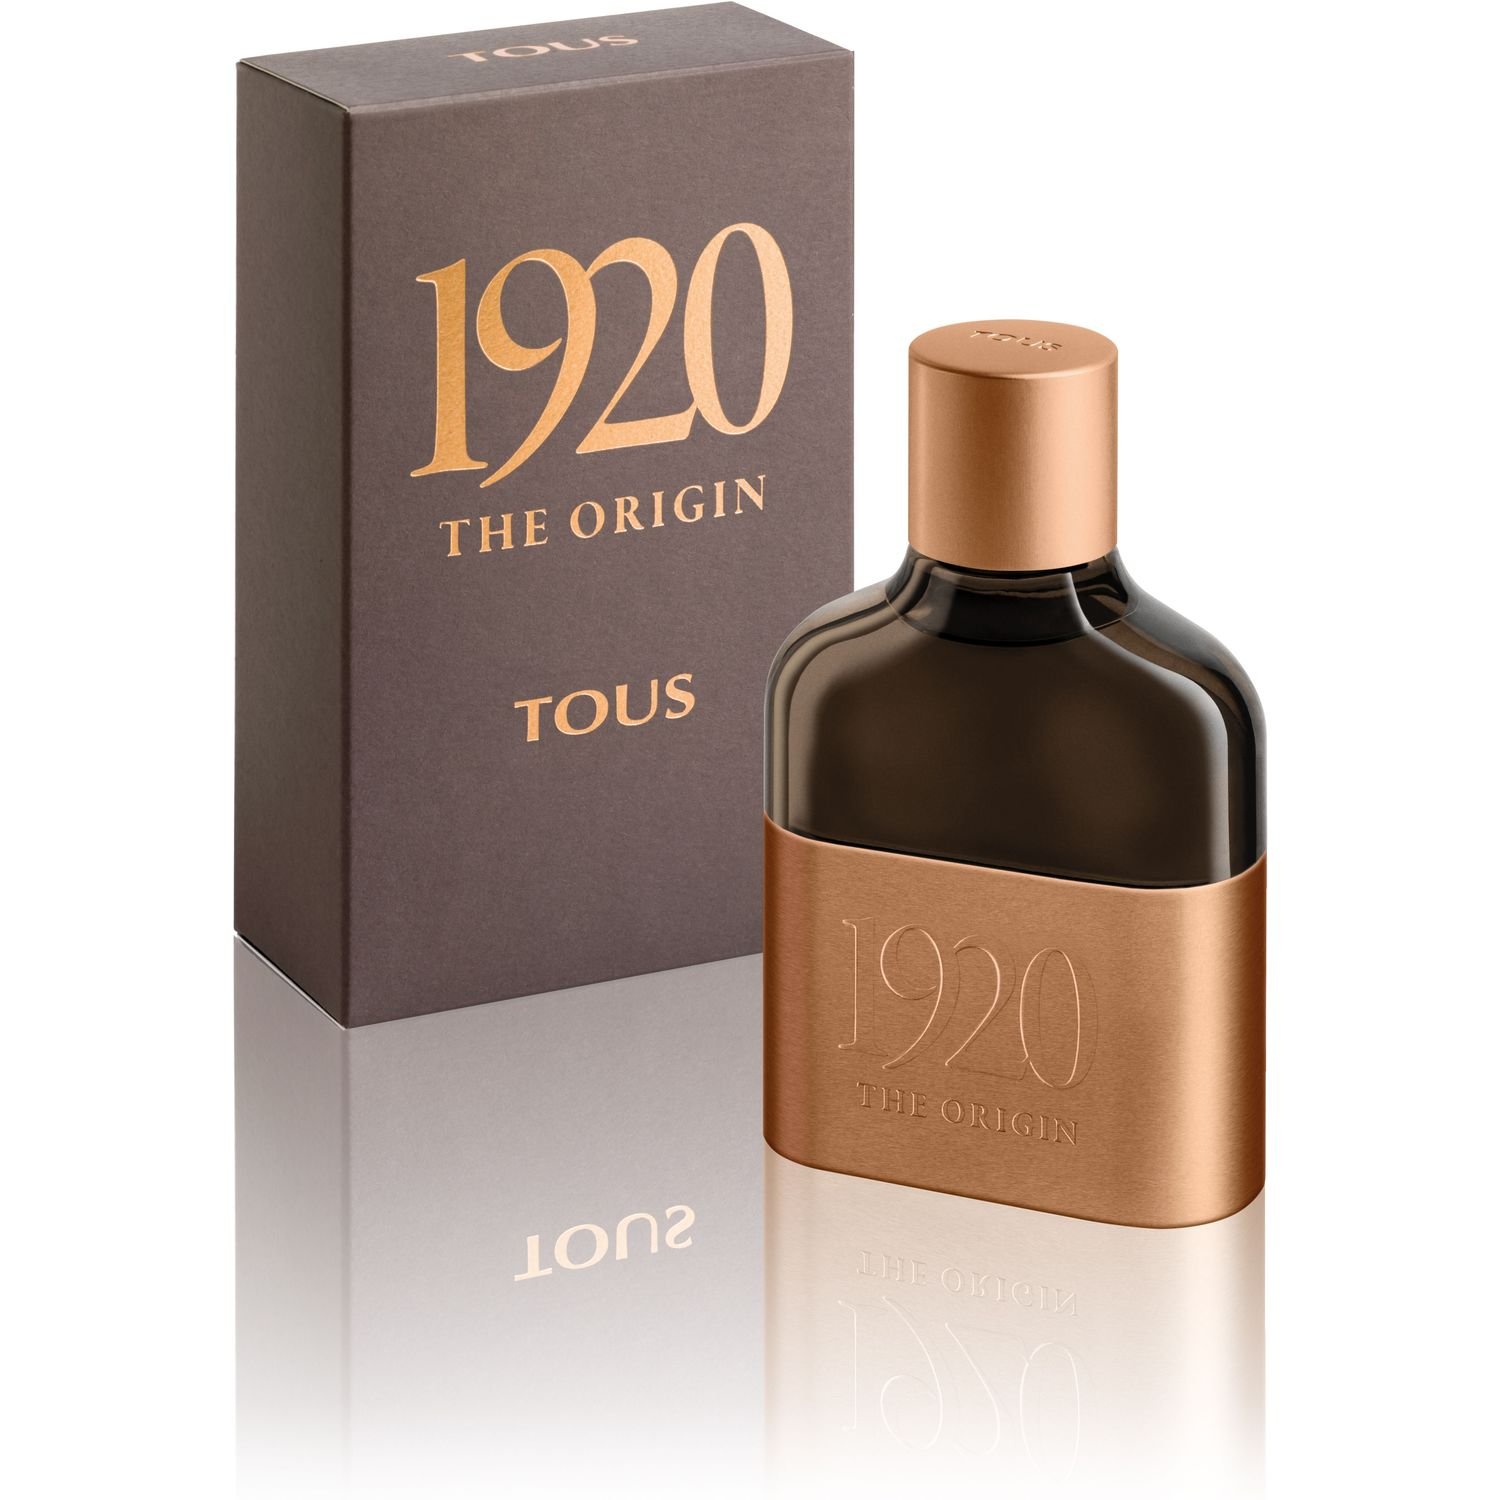 Парфюмерная вода для мужчин Tous 1920 The Origin, 60 мл - фото 1